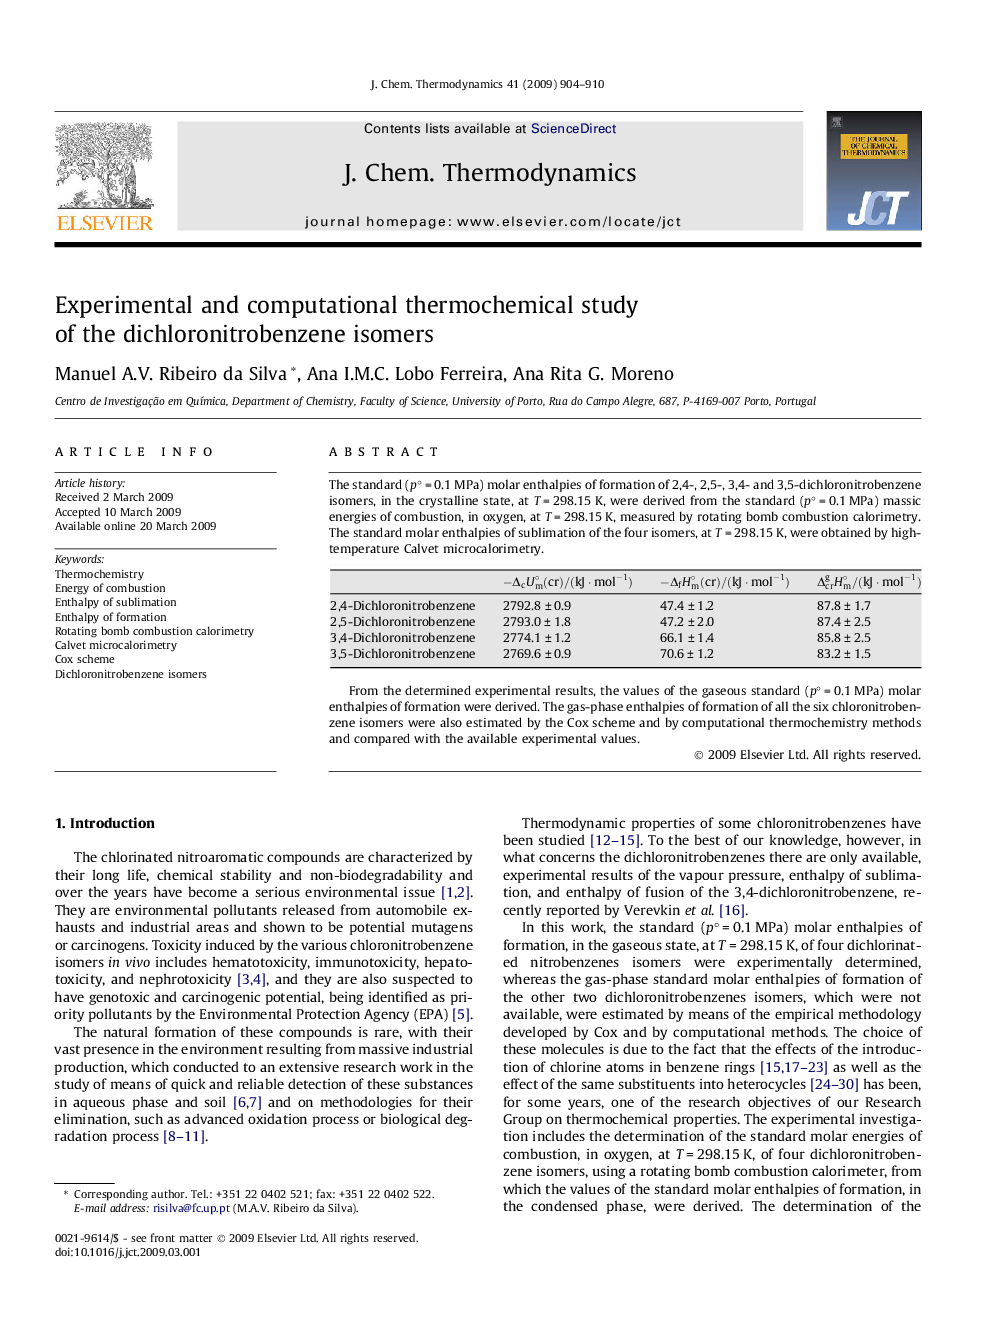 Experimental and computational thermochemical study of the dichloronitrobenzene isomers